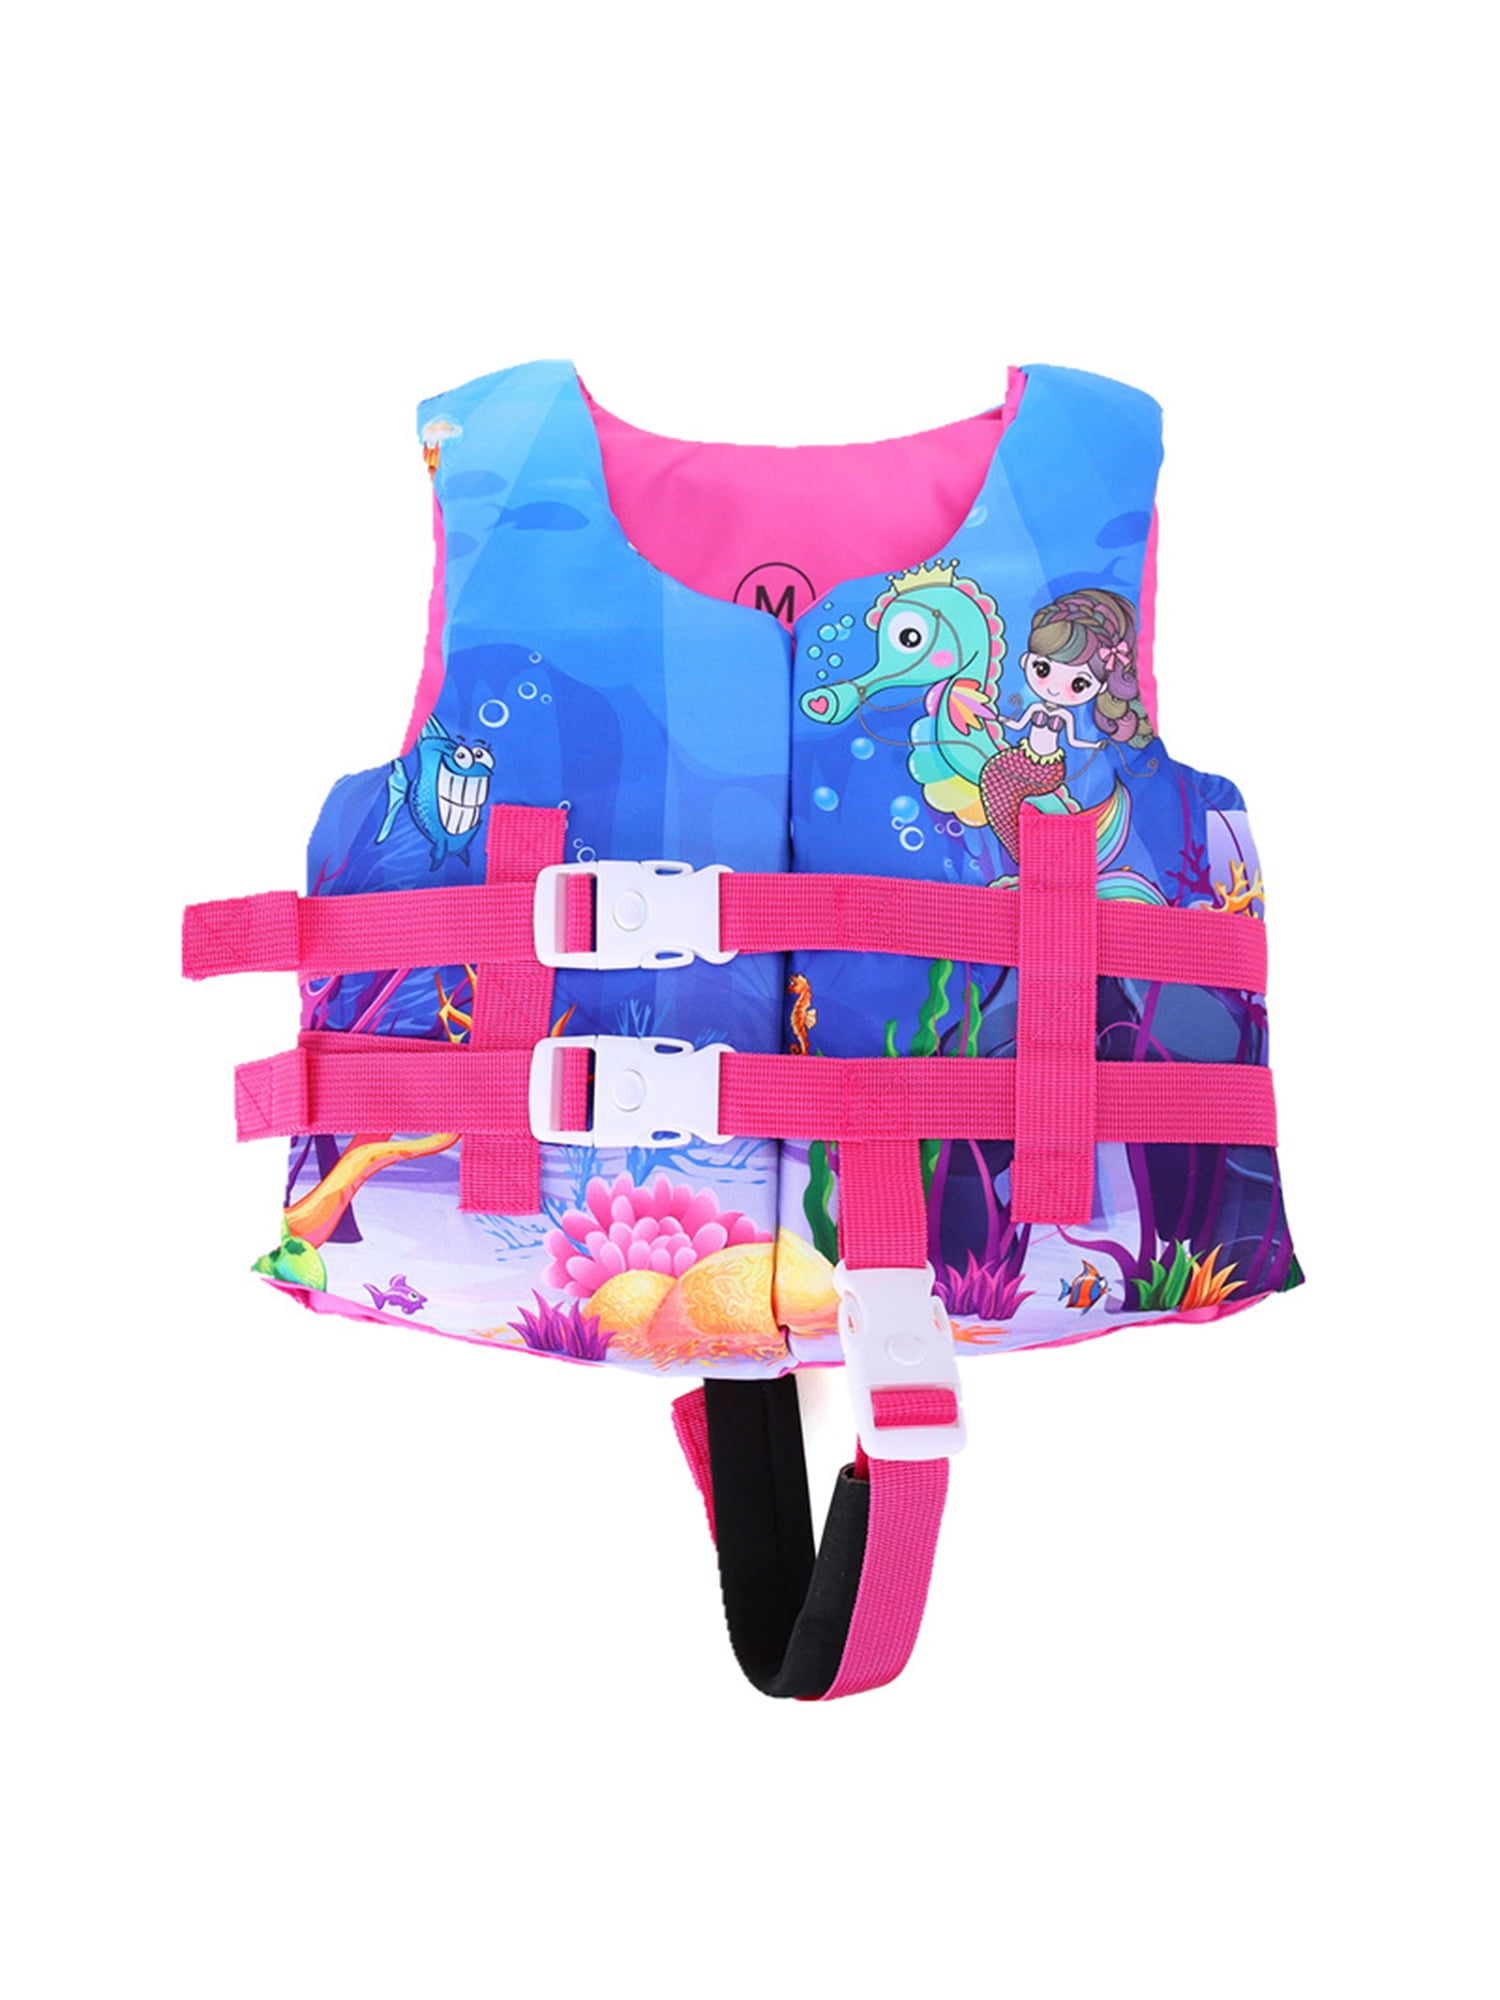 JBEELATE Children Kid's Swimming Fishing Life Jacket Flotation Vest